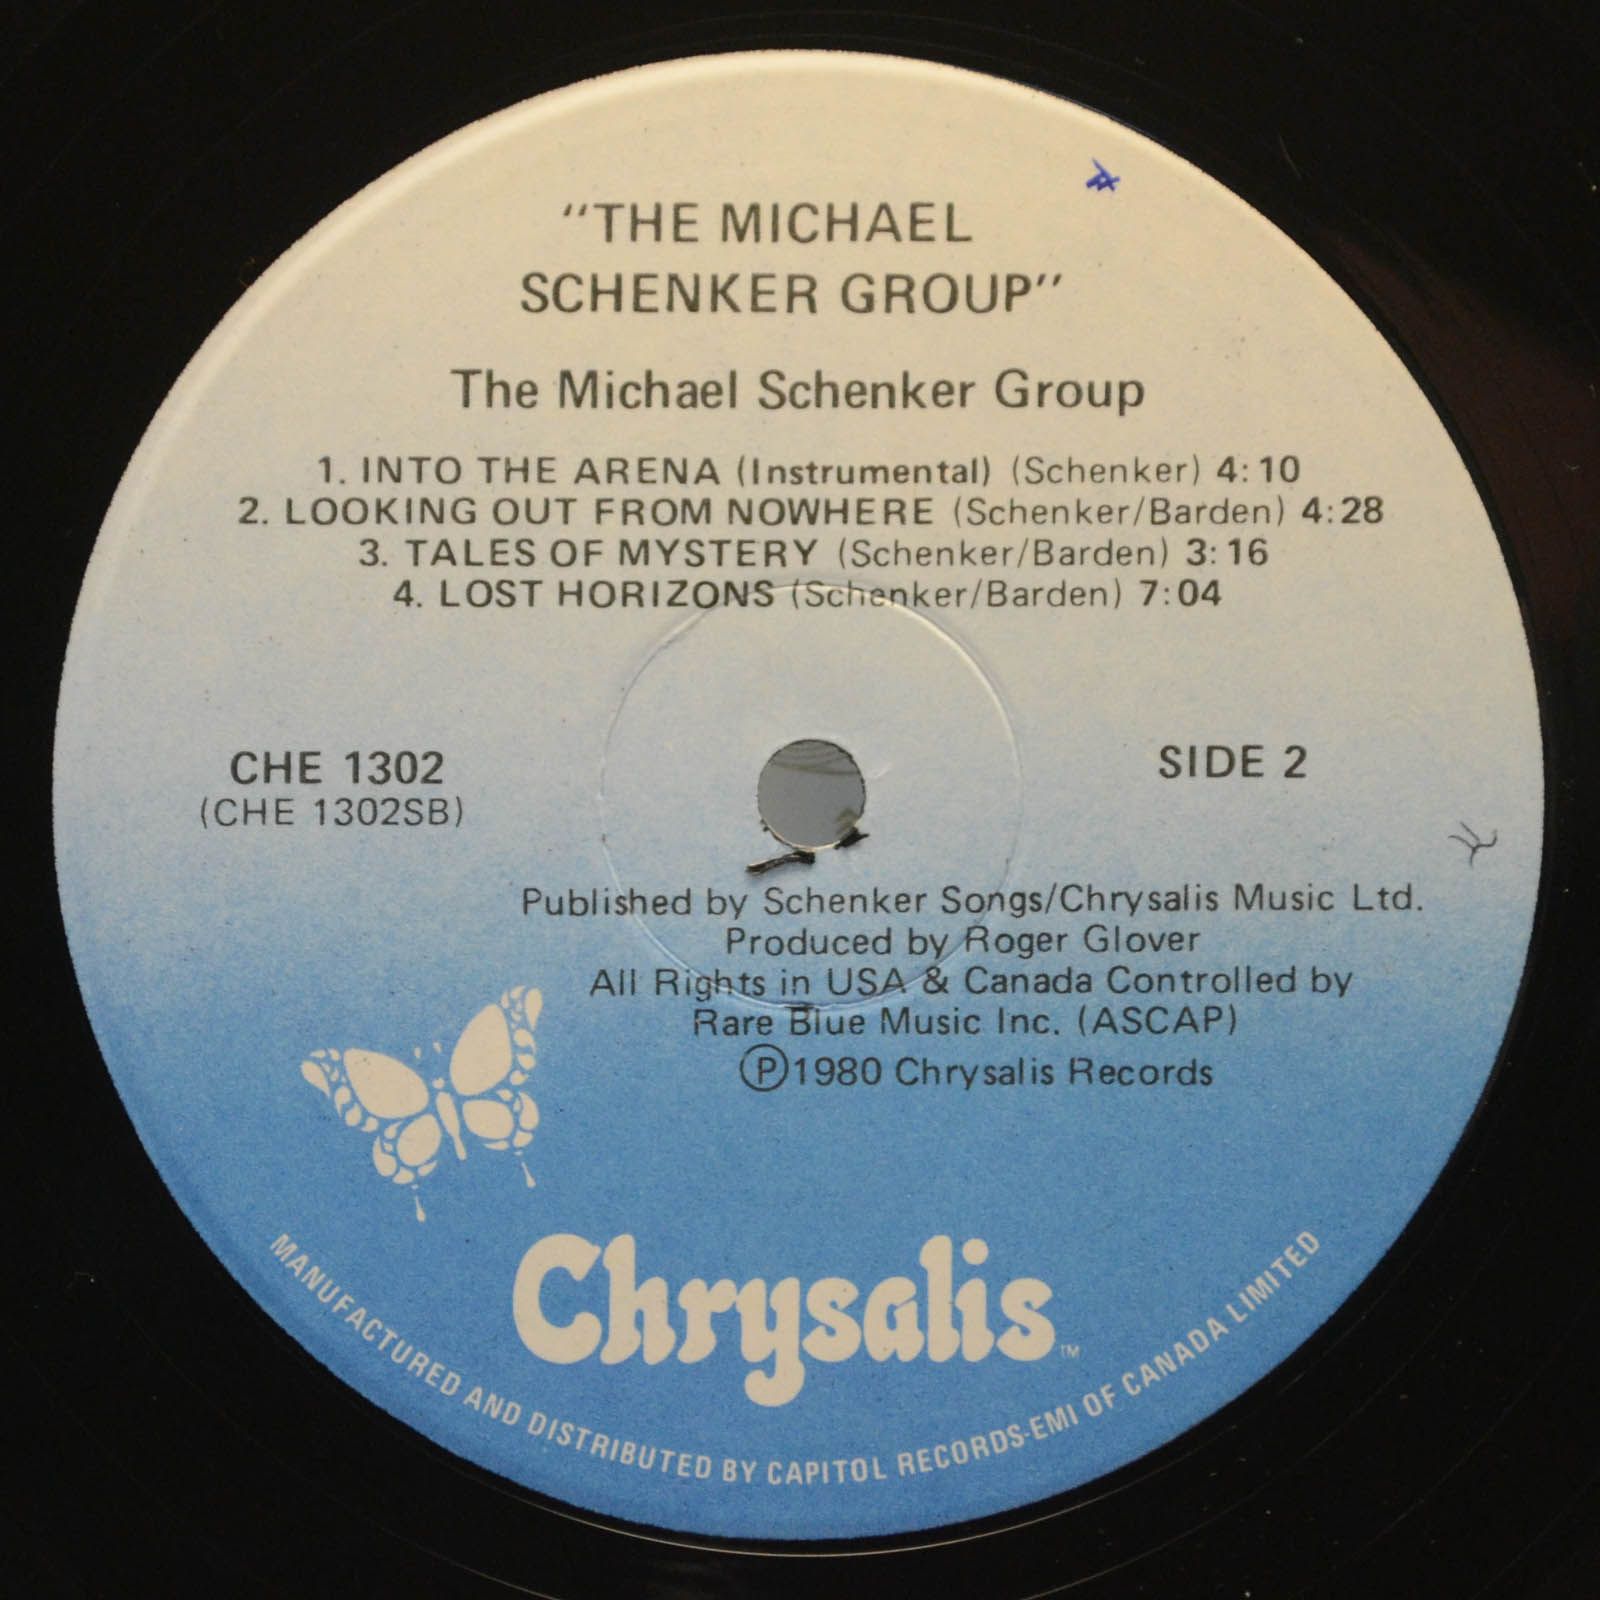 Michael Schenker Group — The Michael Schenker Group, 1980